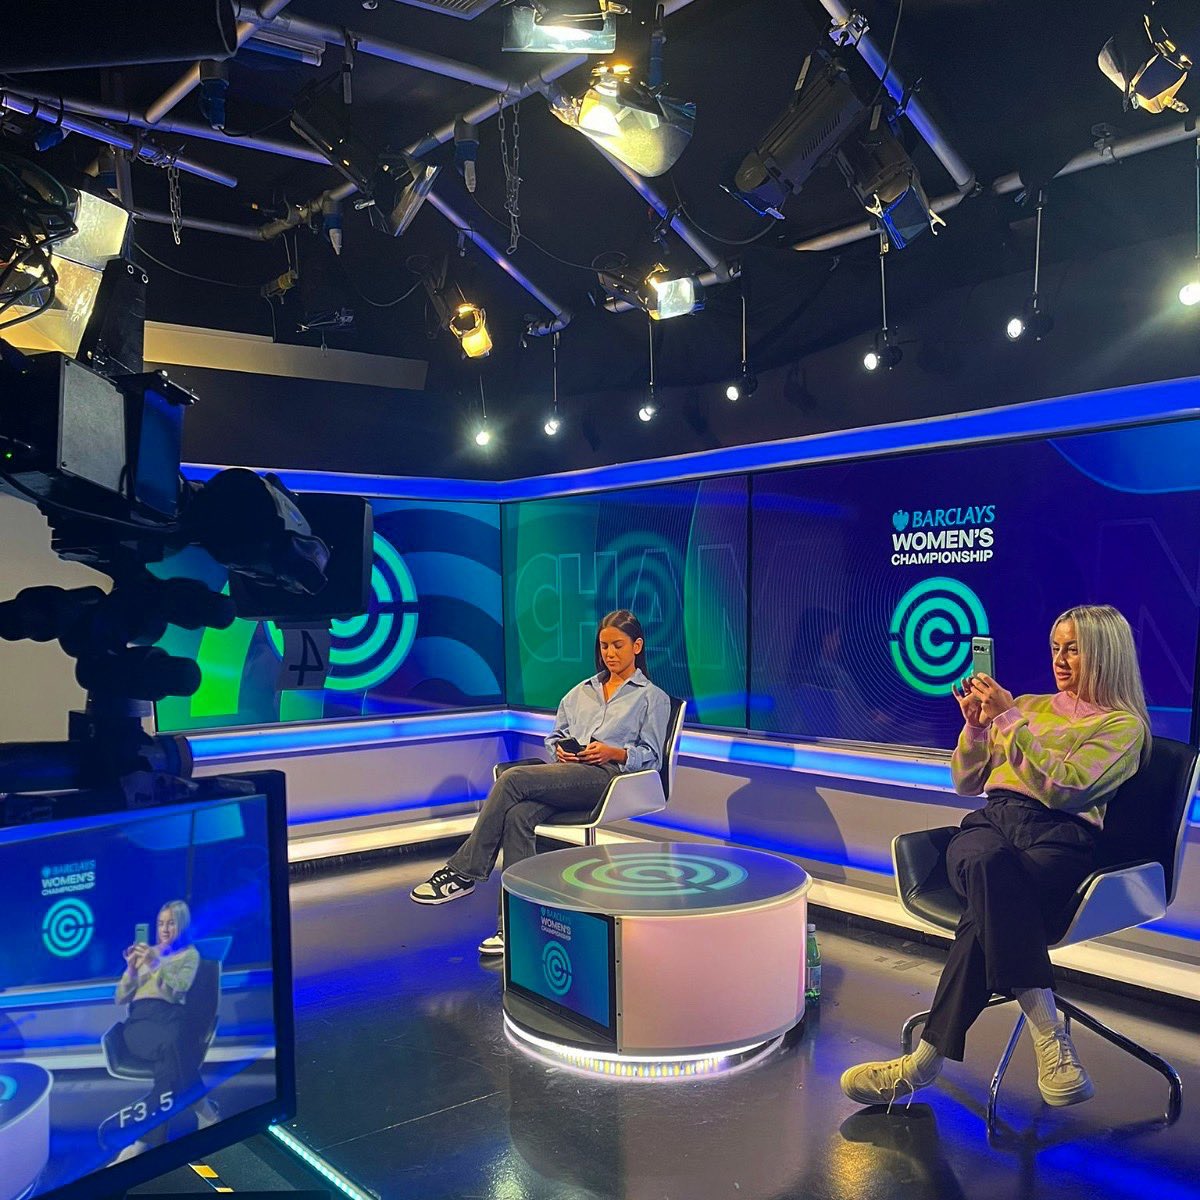 WORK The @BarclaysWC Show has returned starring @MollieKmita & @rosiekmita filmed at our studio in London.